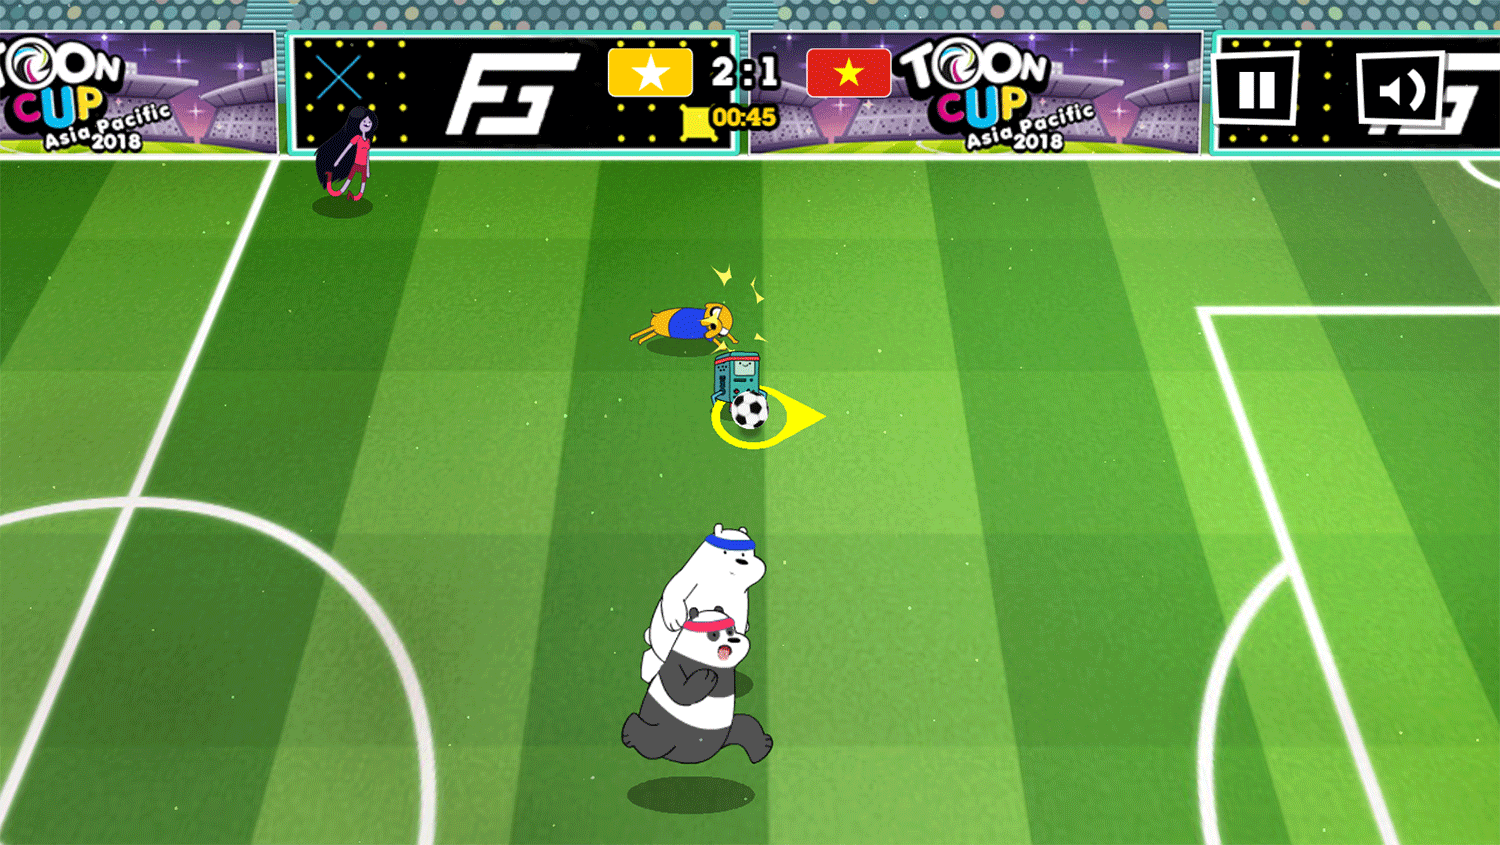 Toon Cup 2018 Game Screenshot.